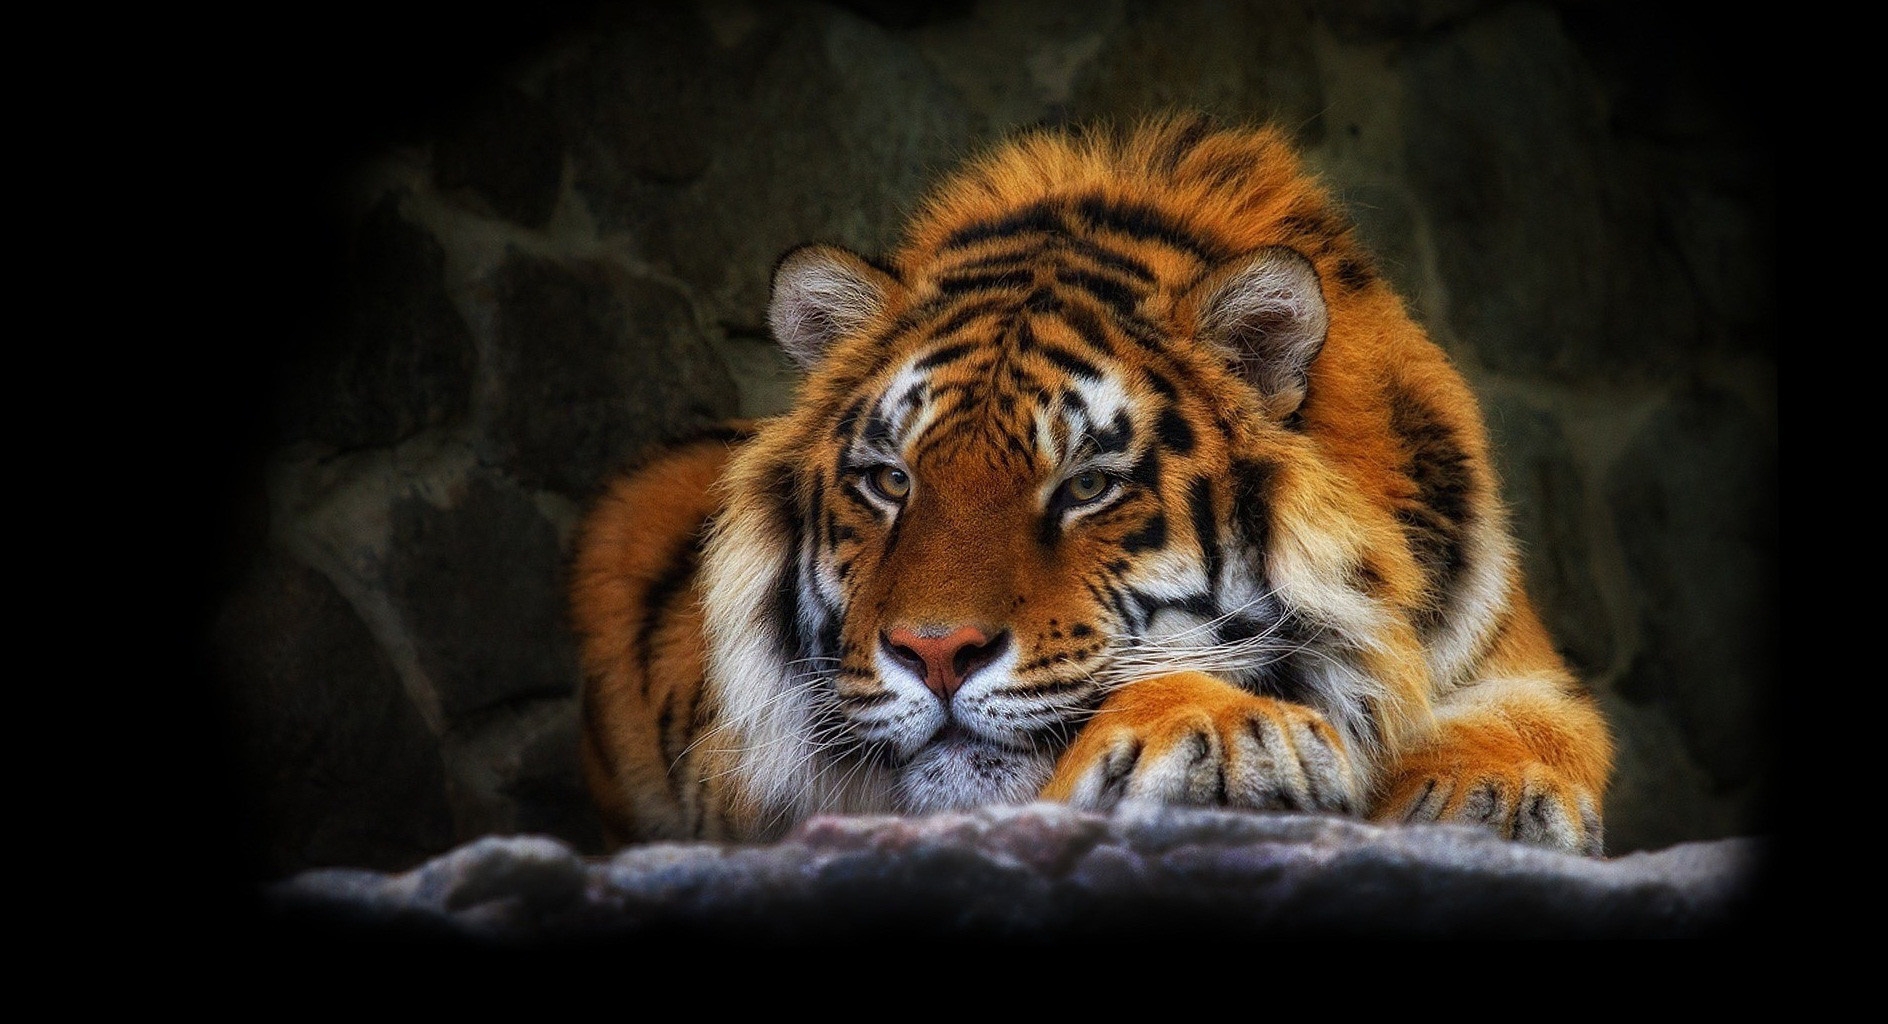 129737 descargar imagen animales, fondo oscuro, tigre, gato salvaje, gato montés: fondos de pantalla y protectores de pantalla gratis